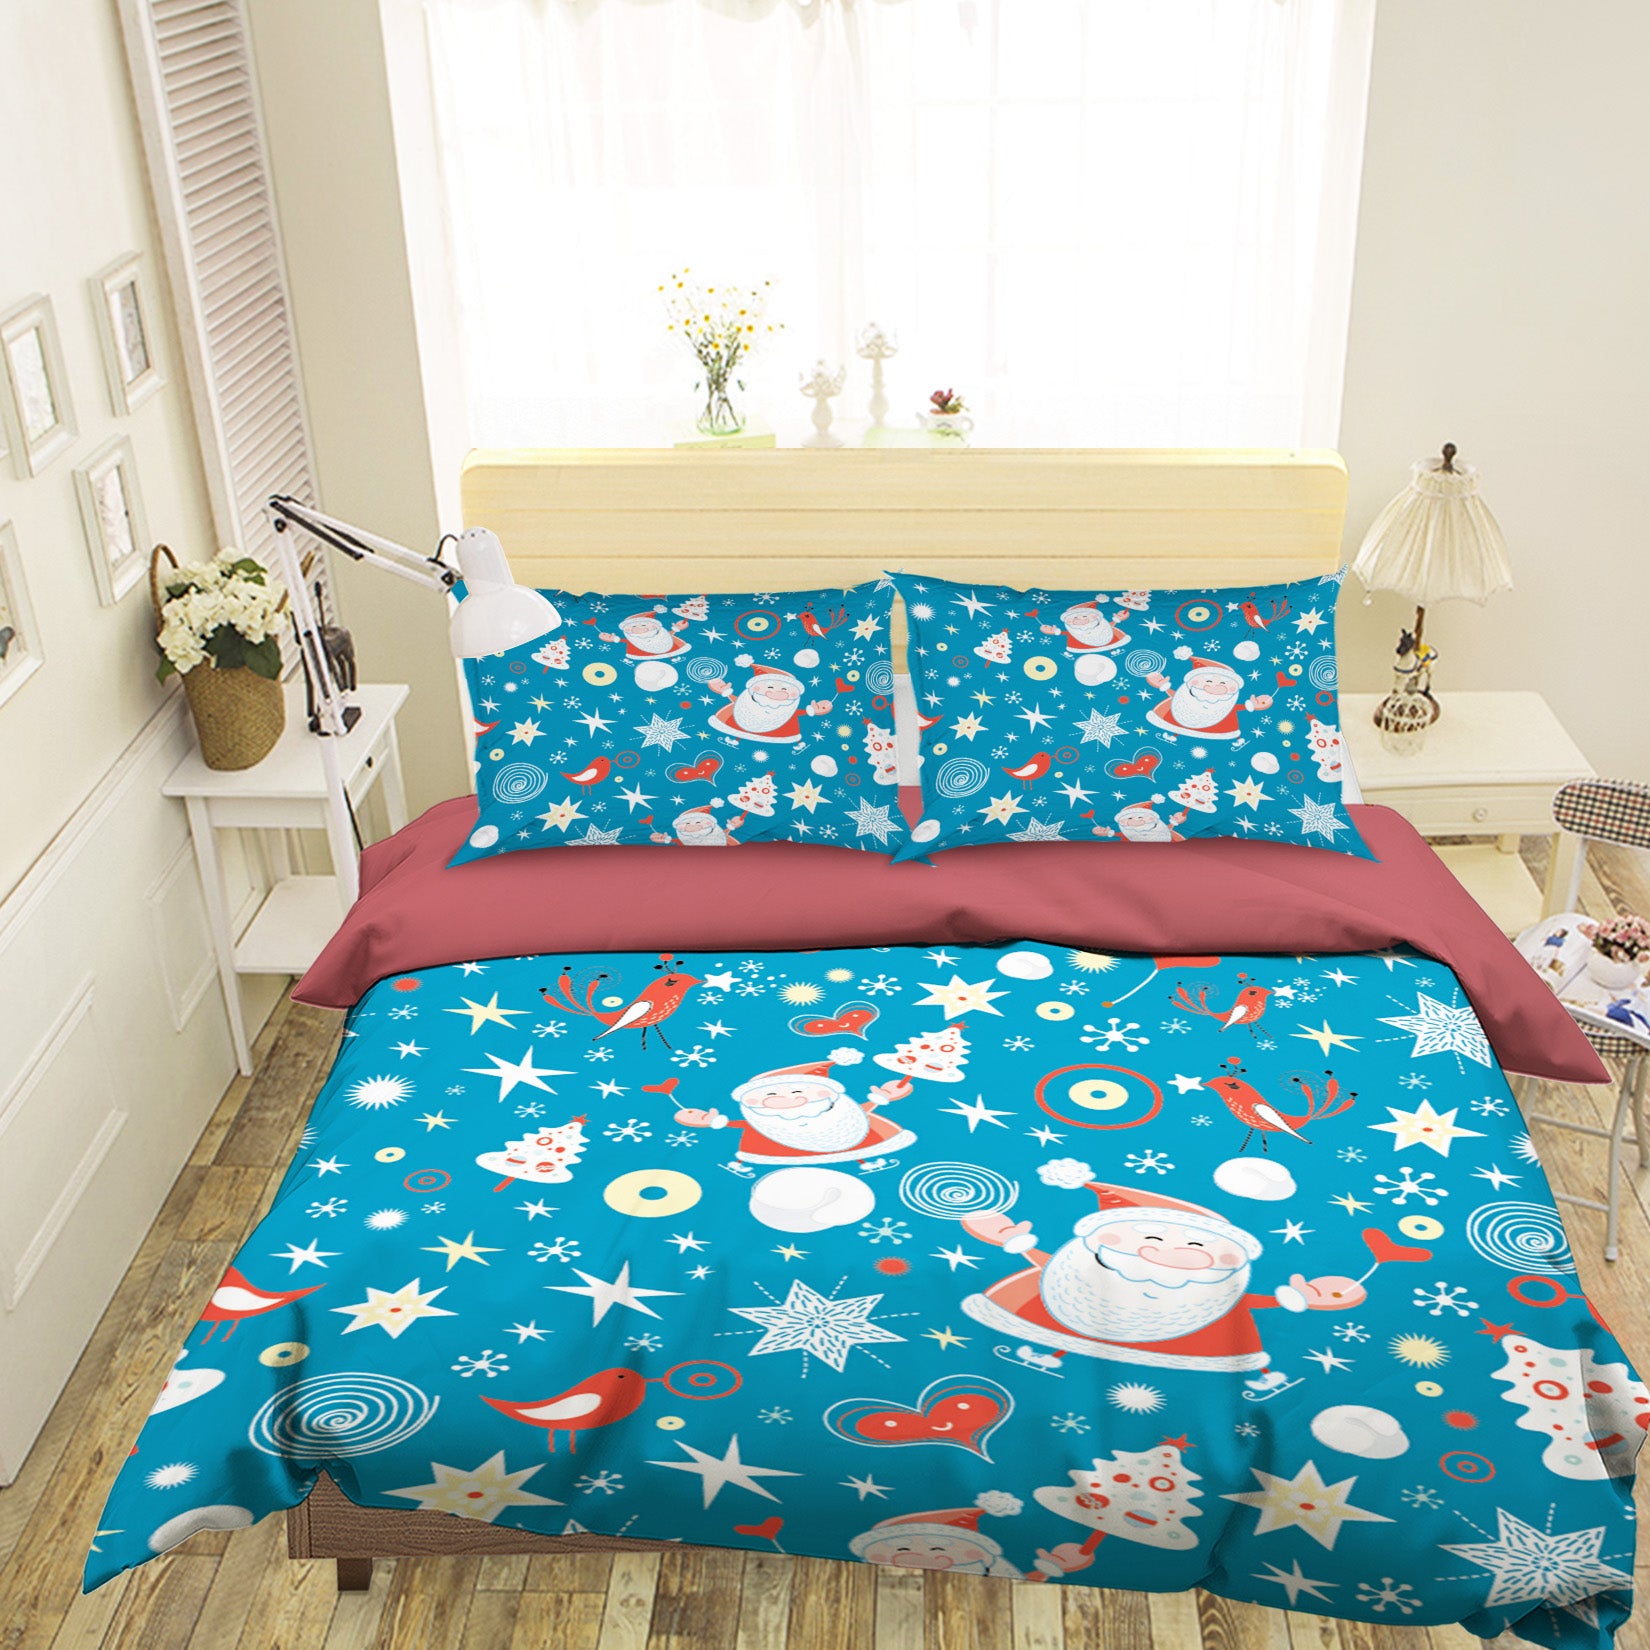 3D Santa Claus Star Pattern 45037 Christmas Quilt Duvet Cover Xmas Bed Pillowcases